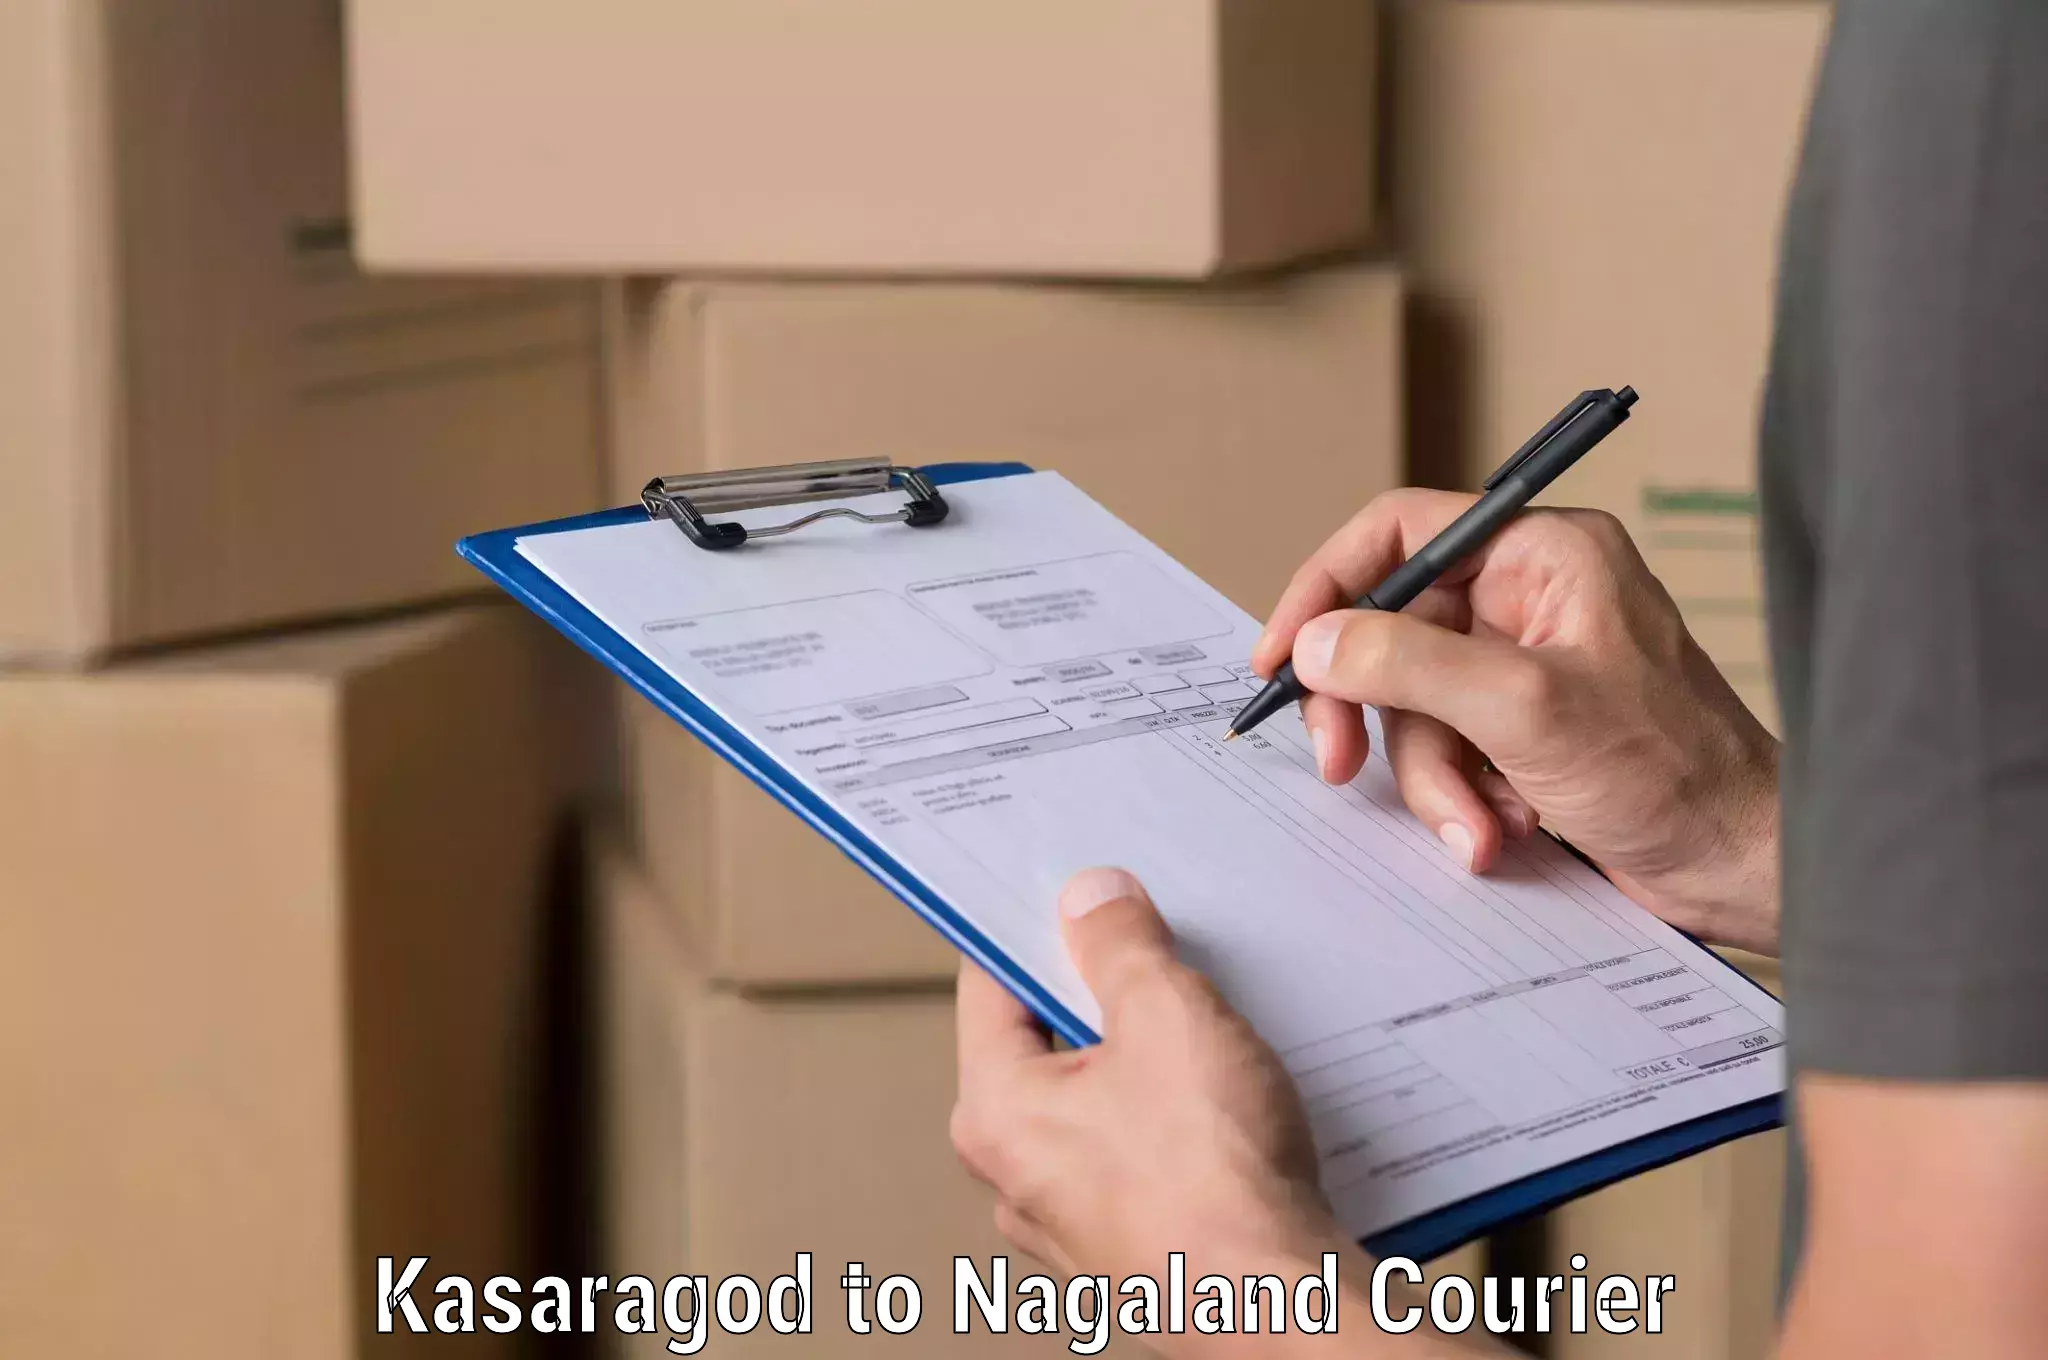 Cash on delivery service Kasaragod to Kohima